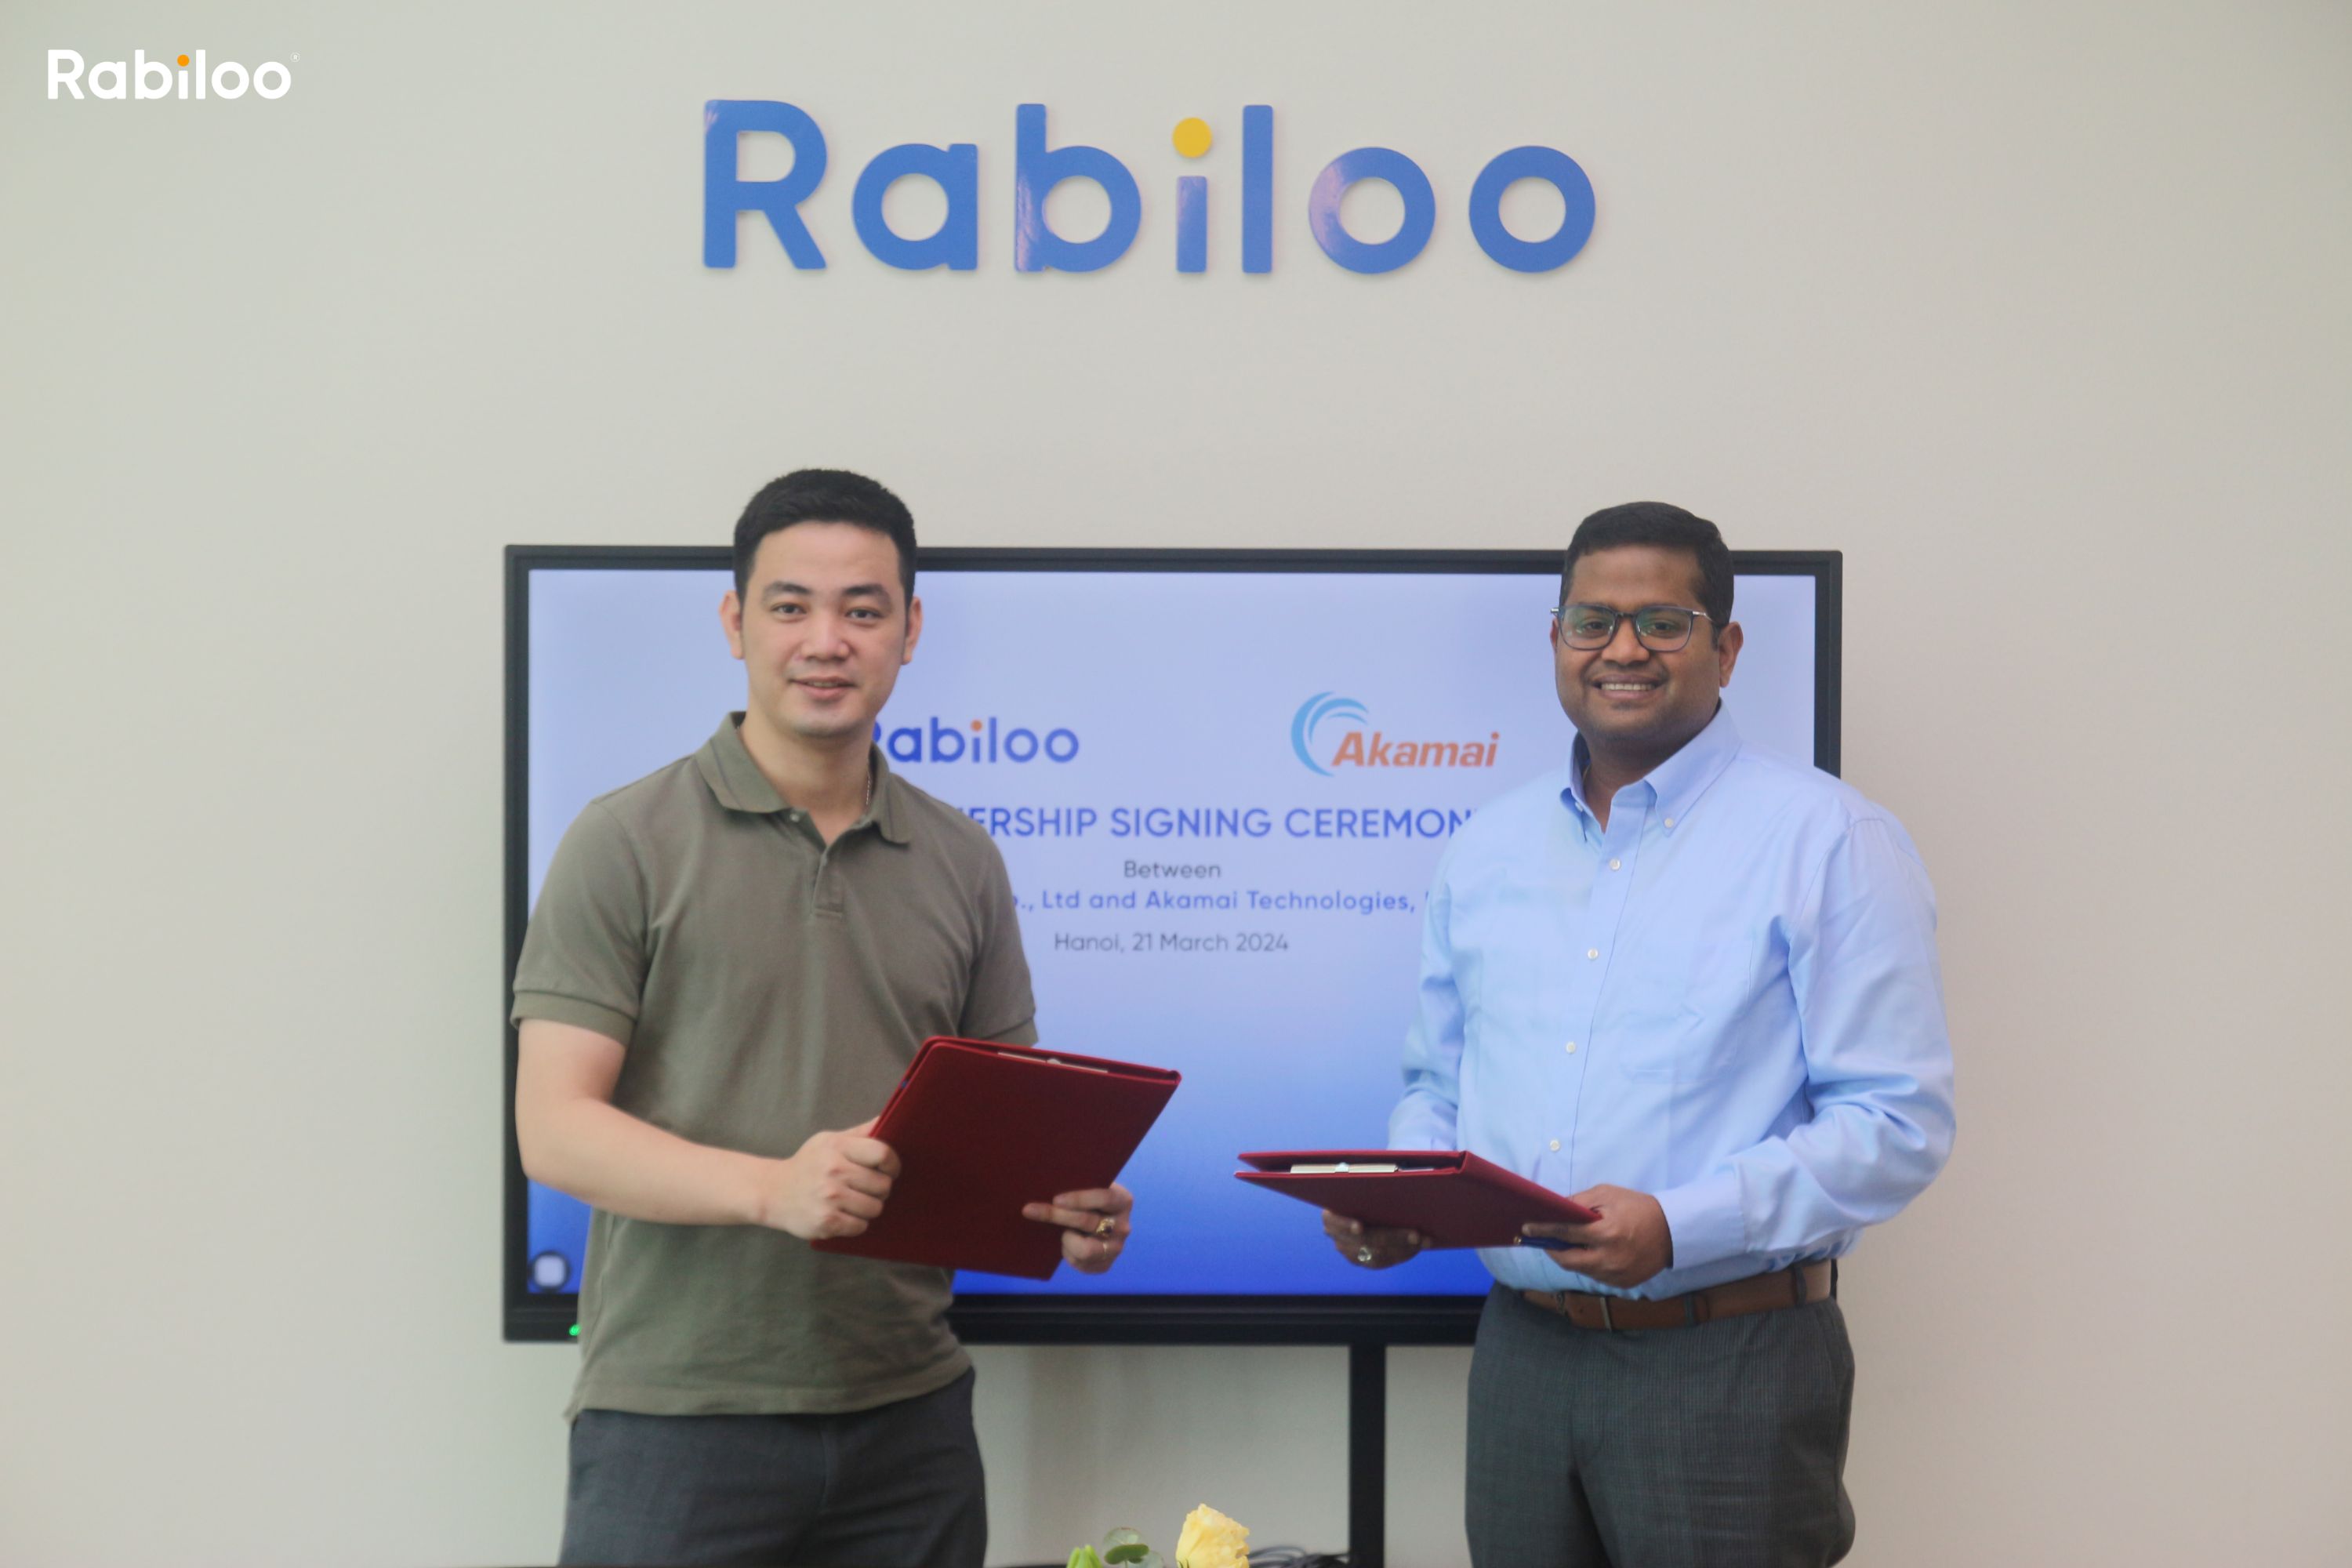 Rabioo forms a partnership with Akamai